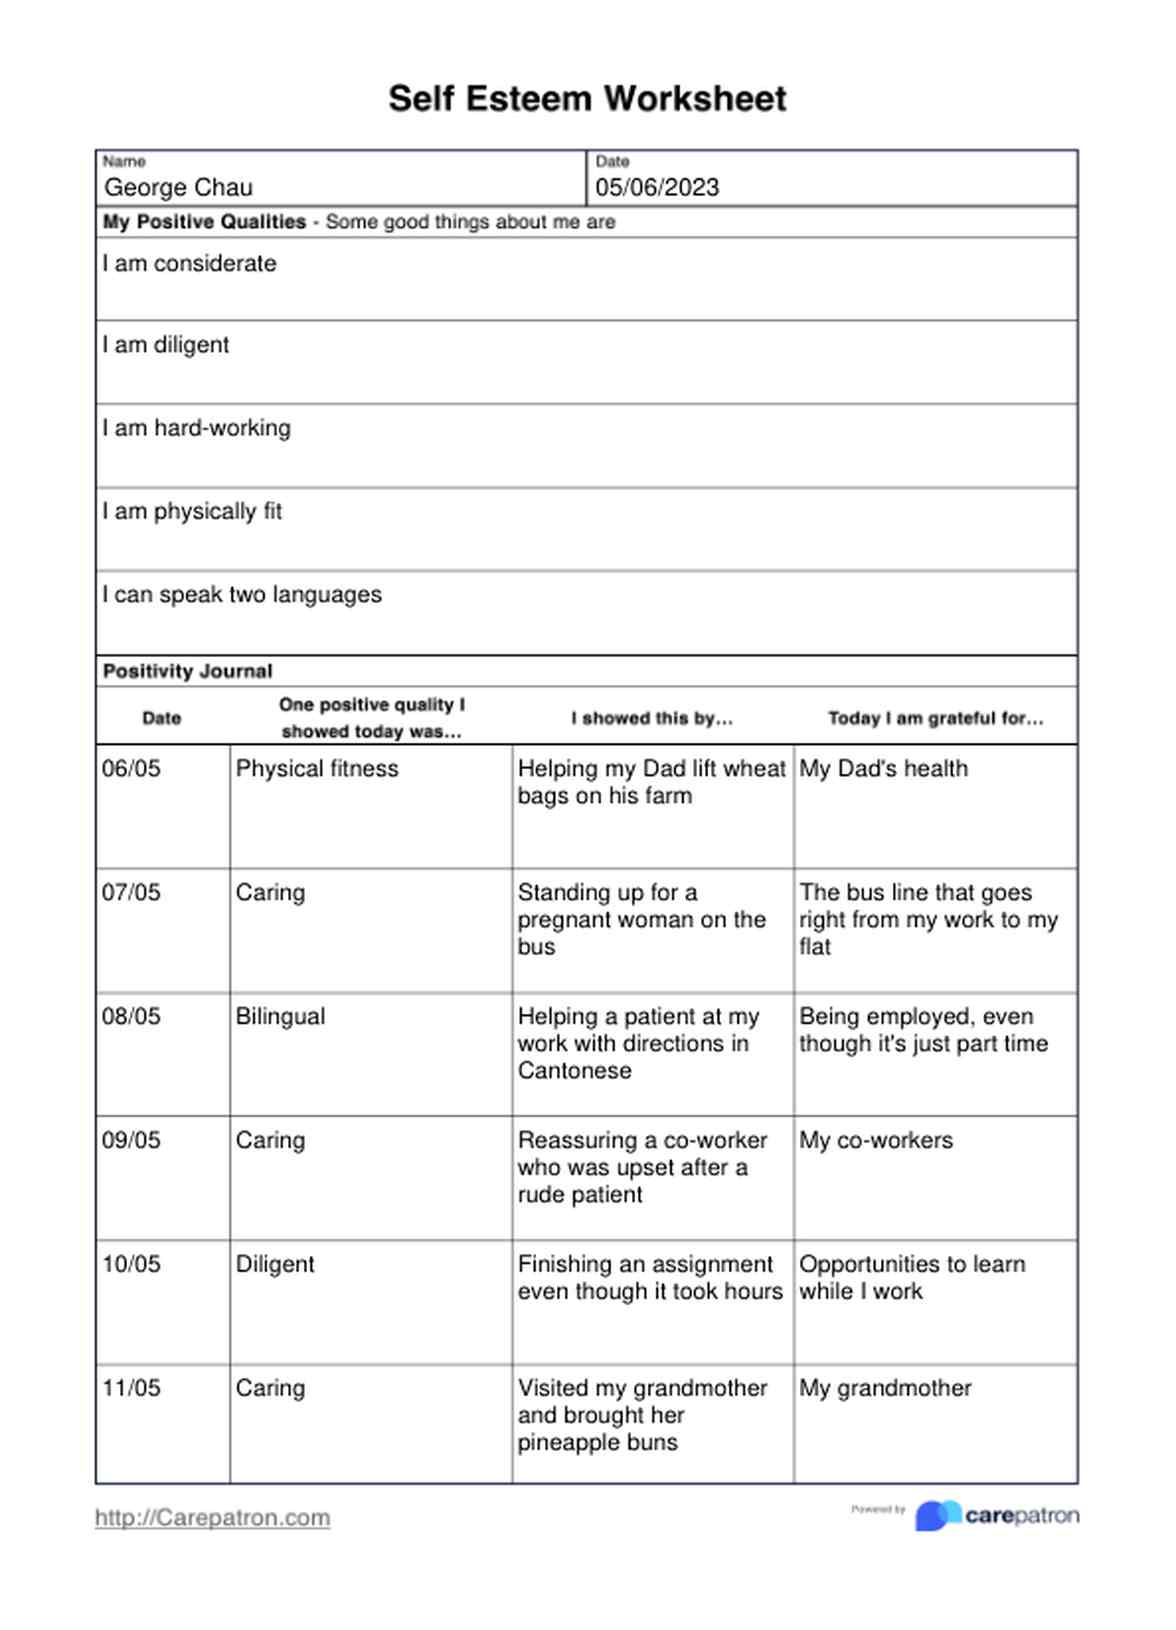 Self Esteem Worksheets PDF Example